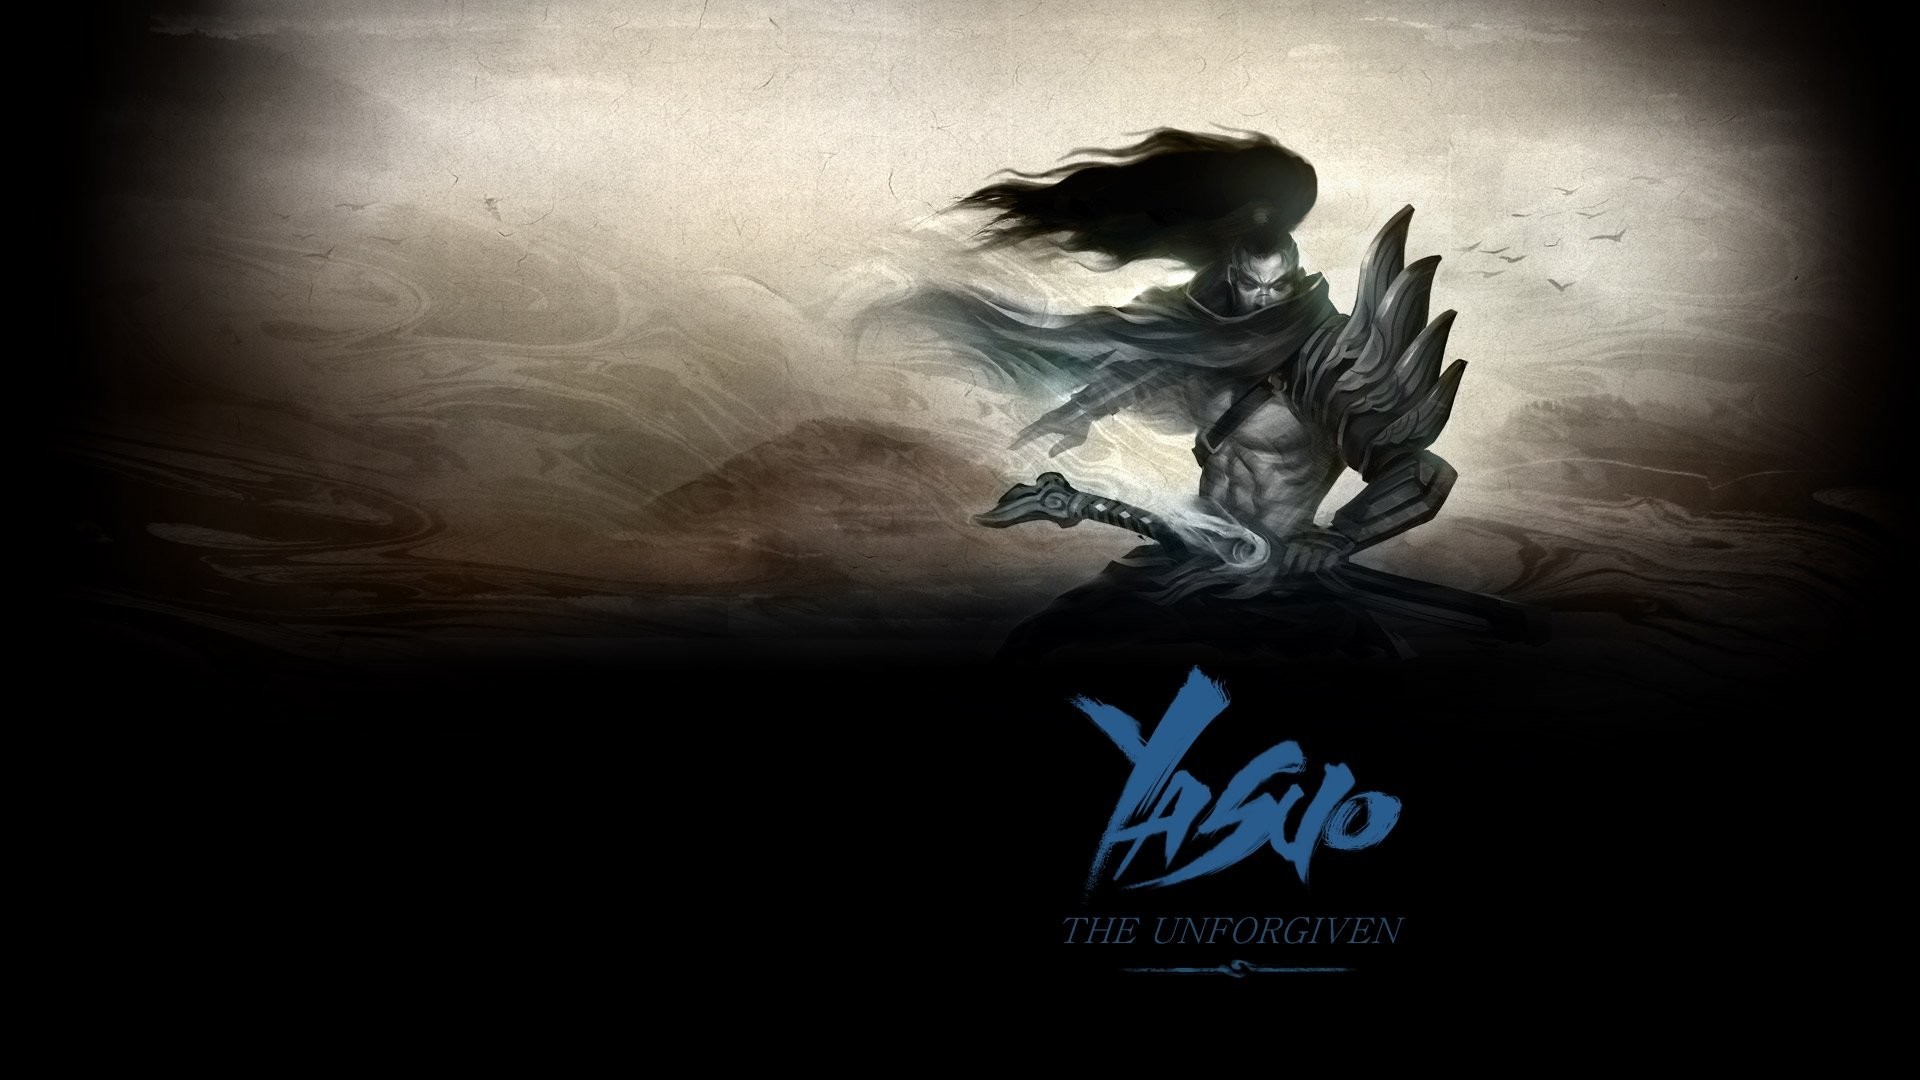 Truth Dragon 'Yasuo' | League of Legends (LOL) 4K wallpaper download